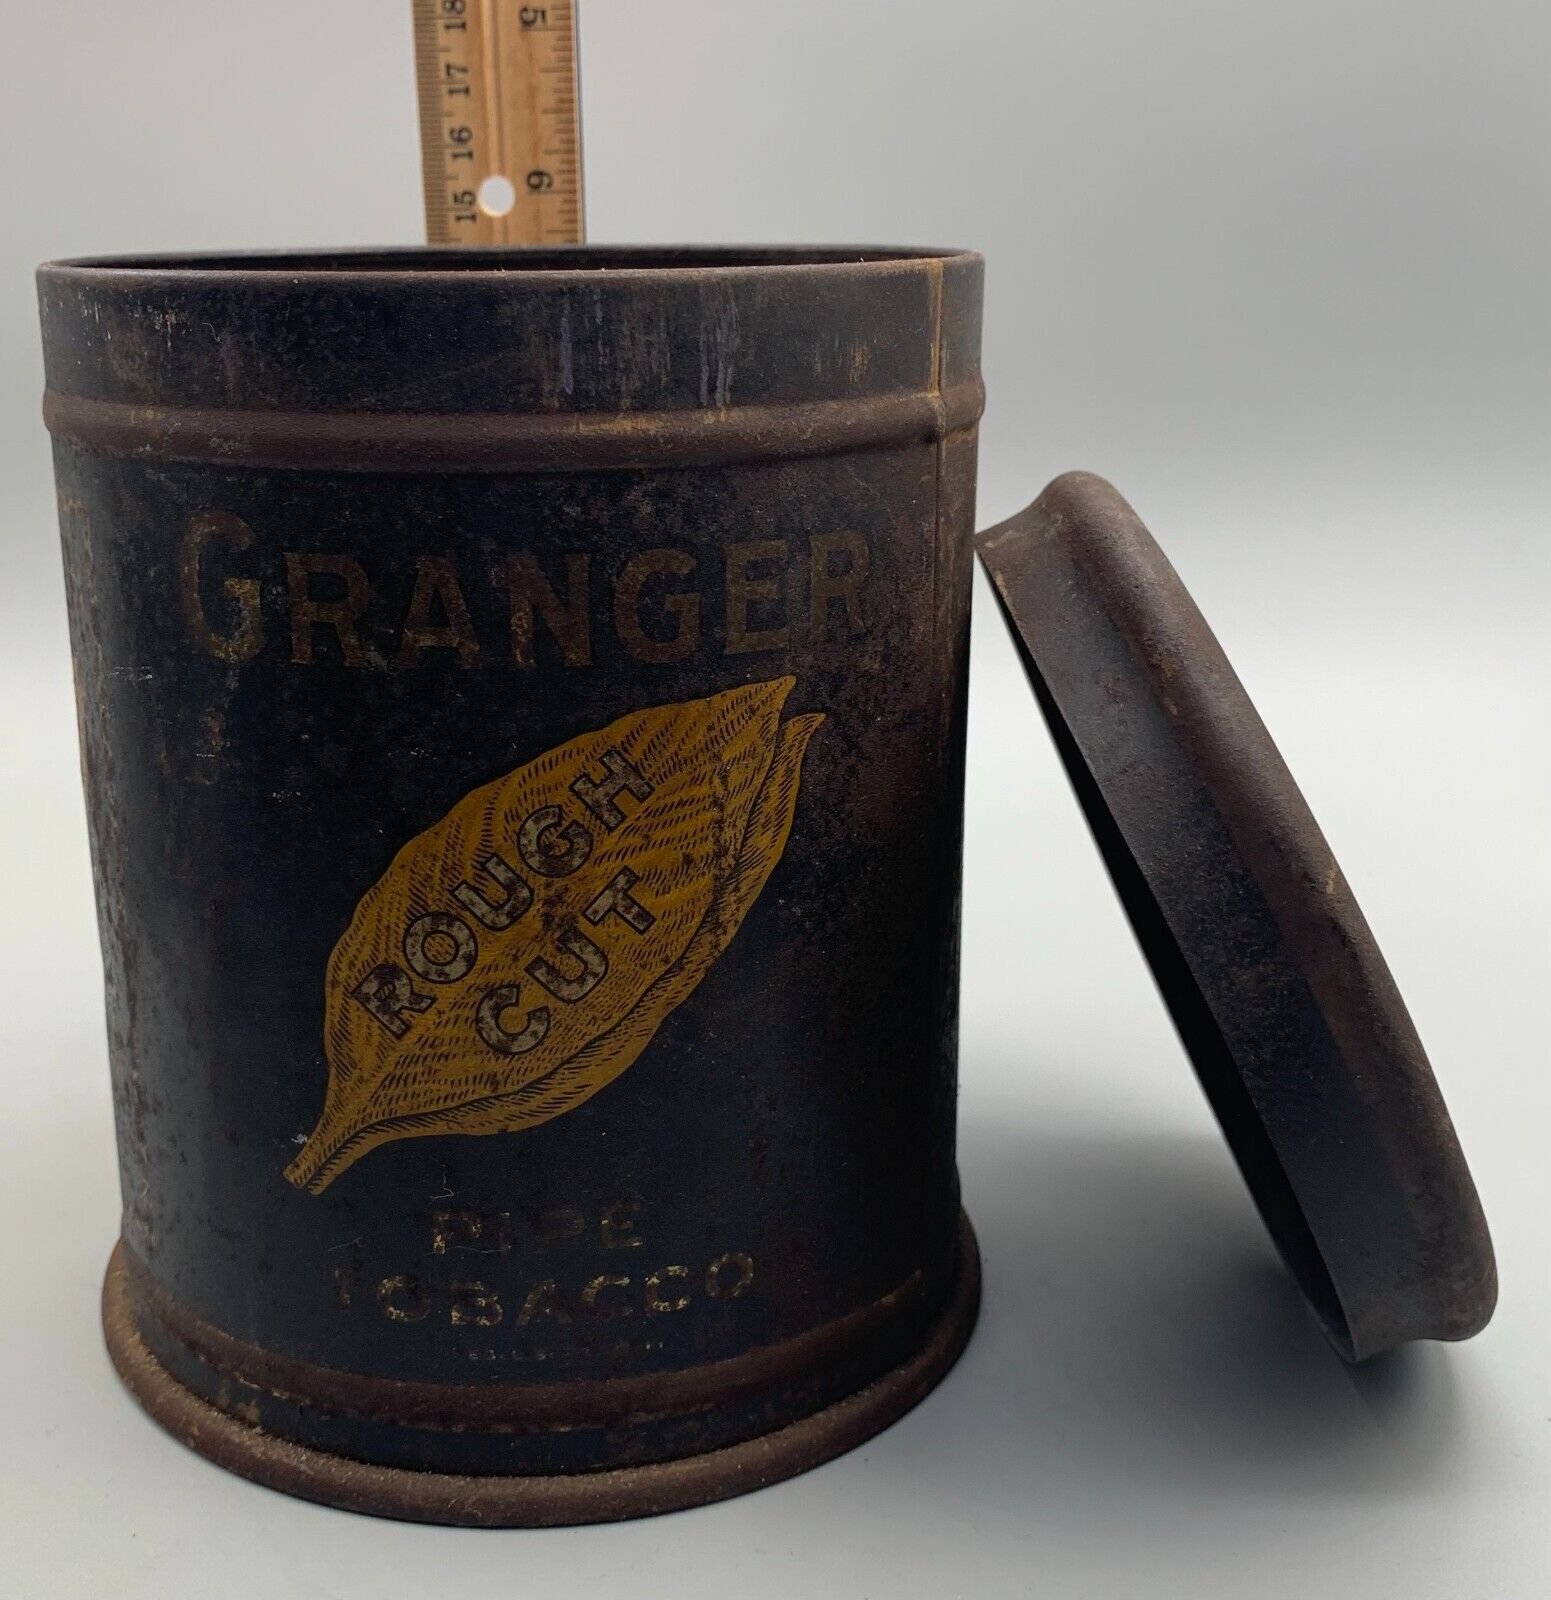 Vintage Granger Tobacco Tin (empty)